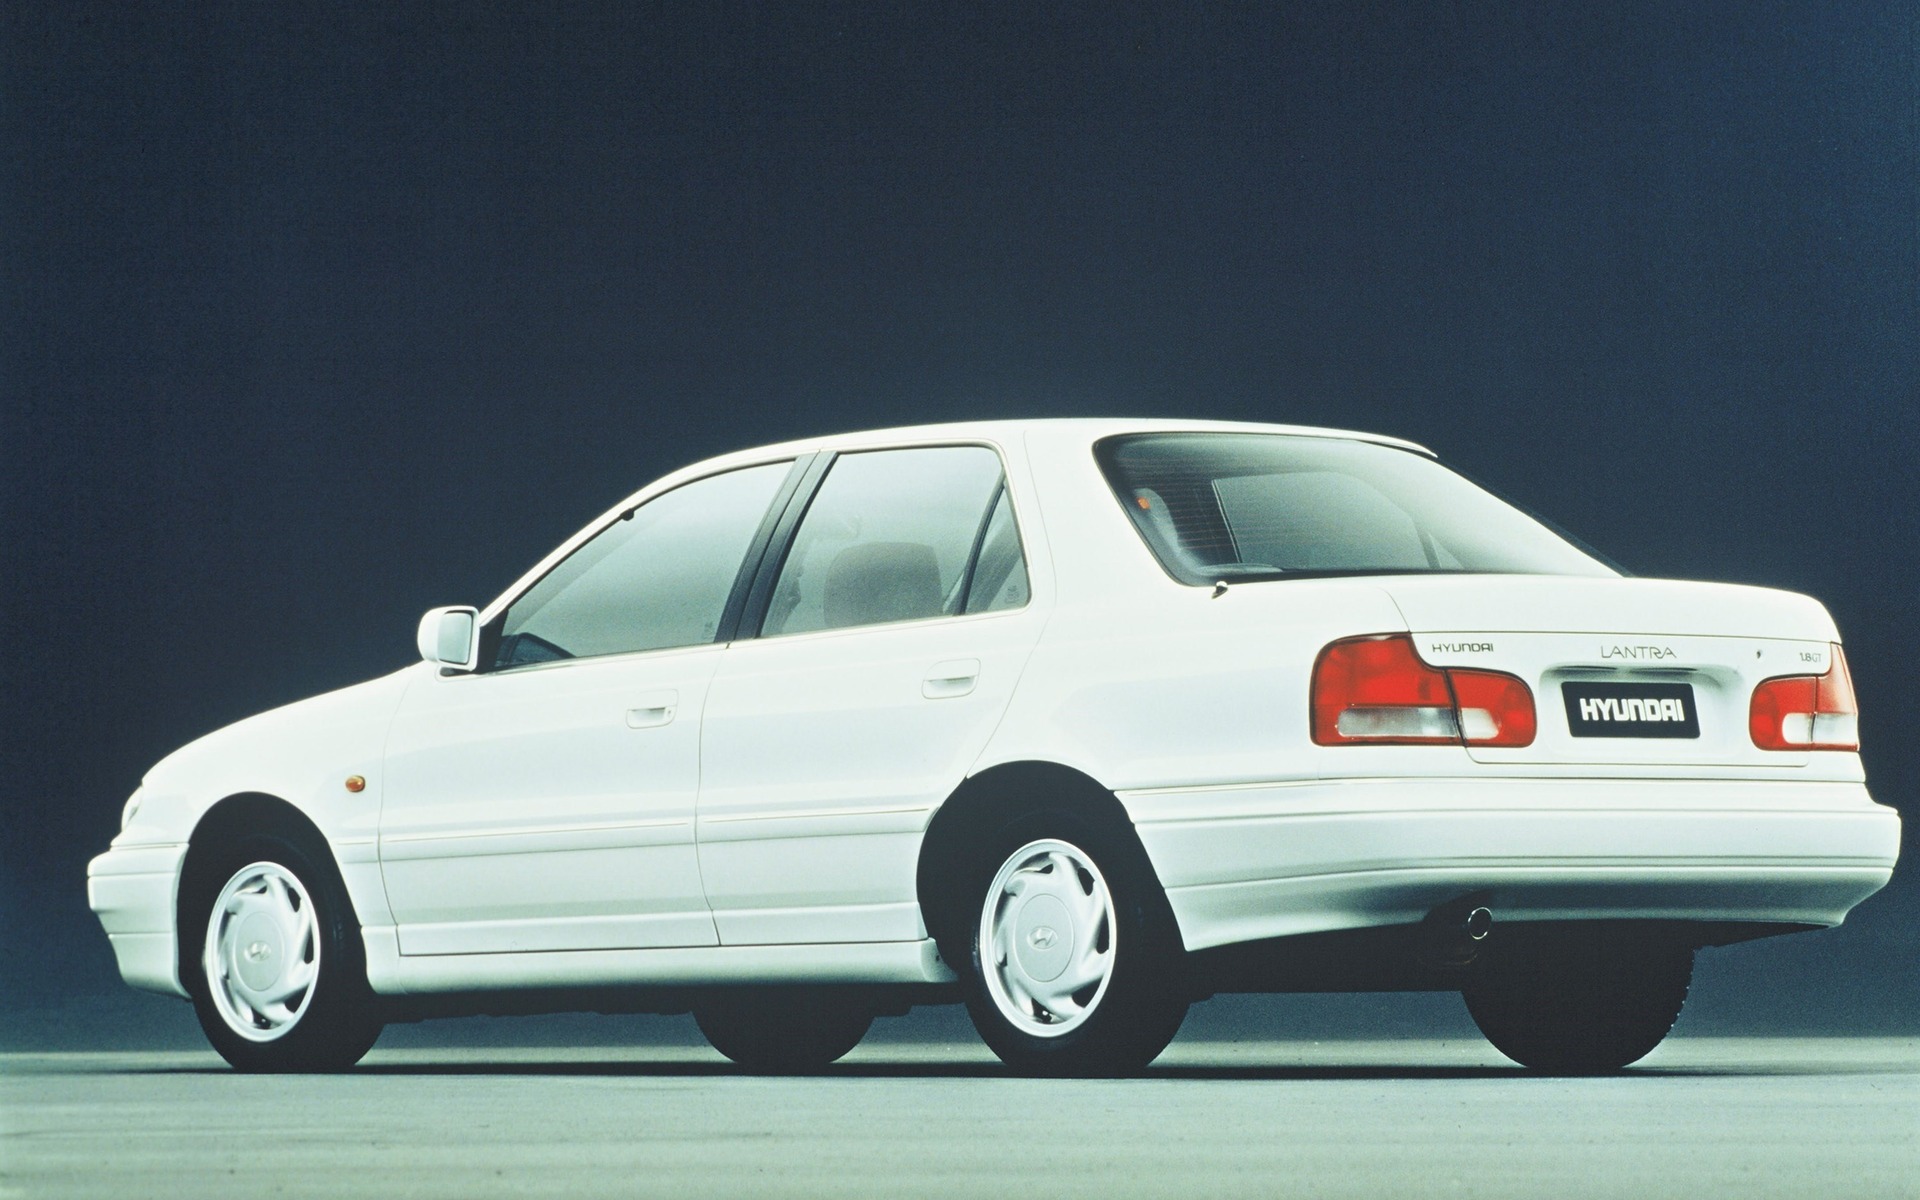 1994 Hyundai Elantra